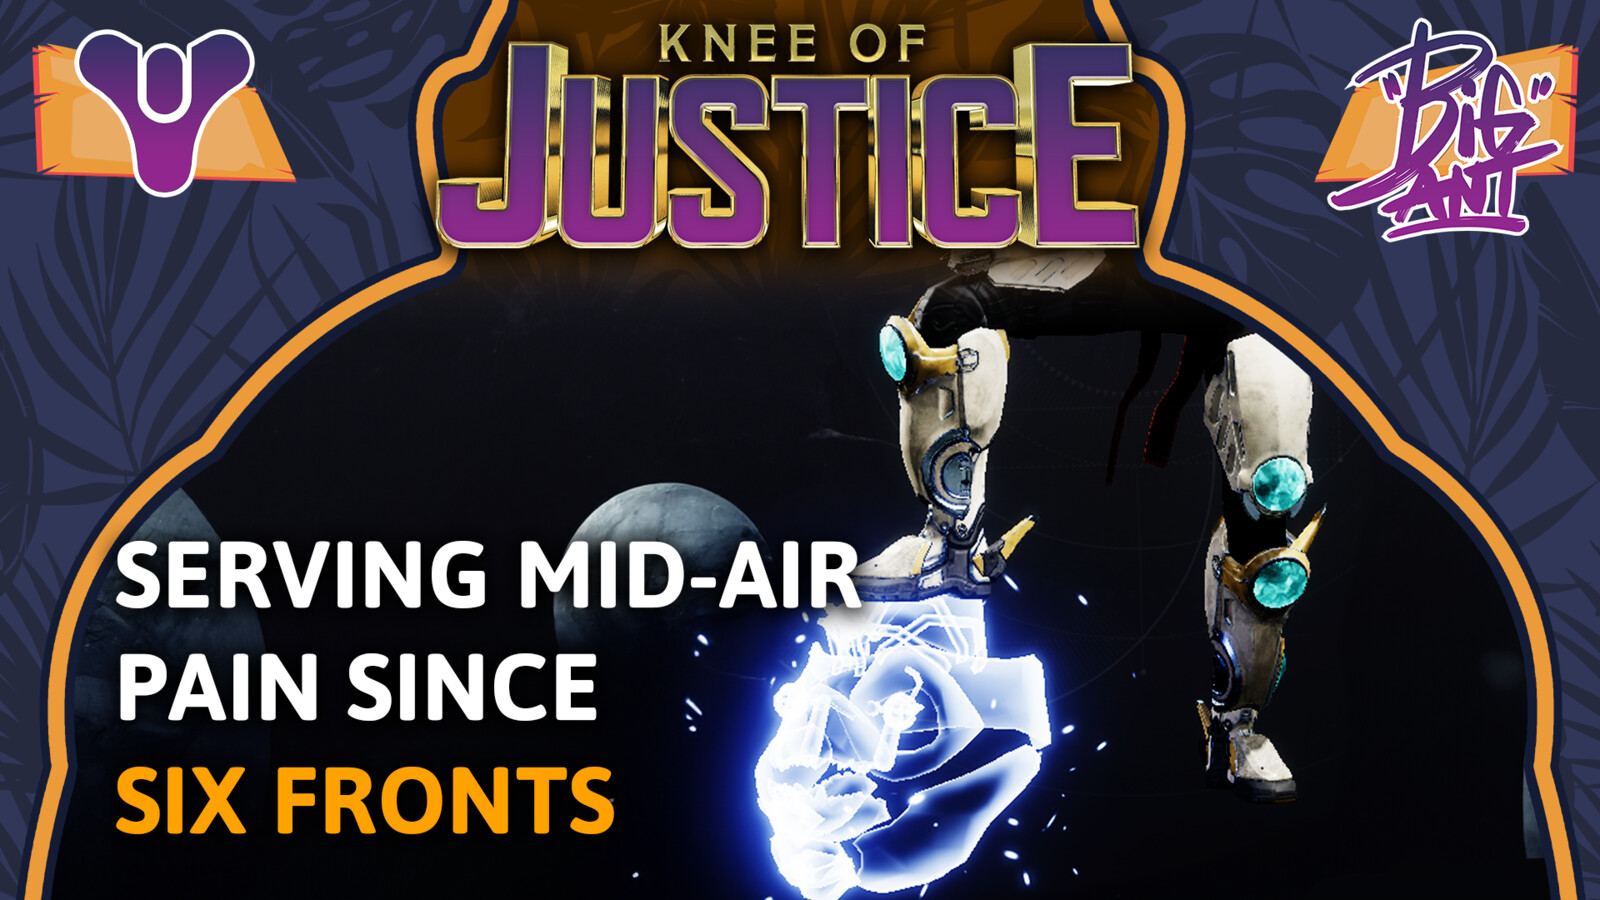 Destiny - Knee Of Justice #4
for BigAnt (https://twitter.com/Bigantsgaming)